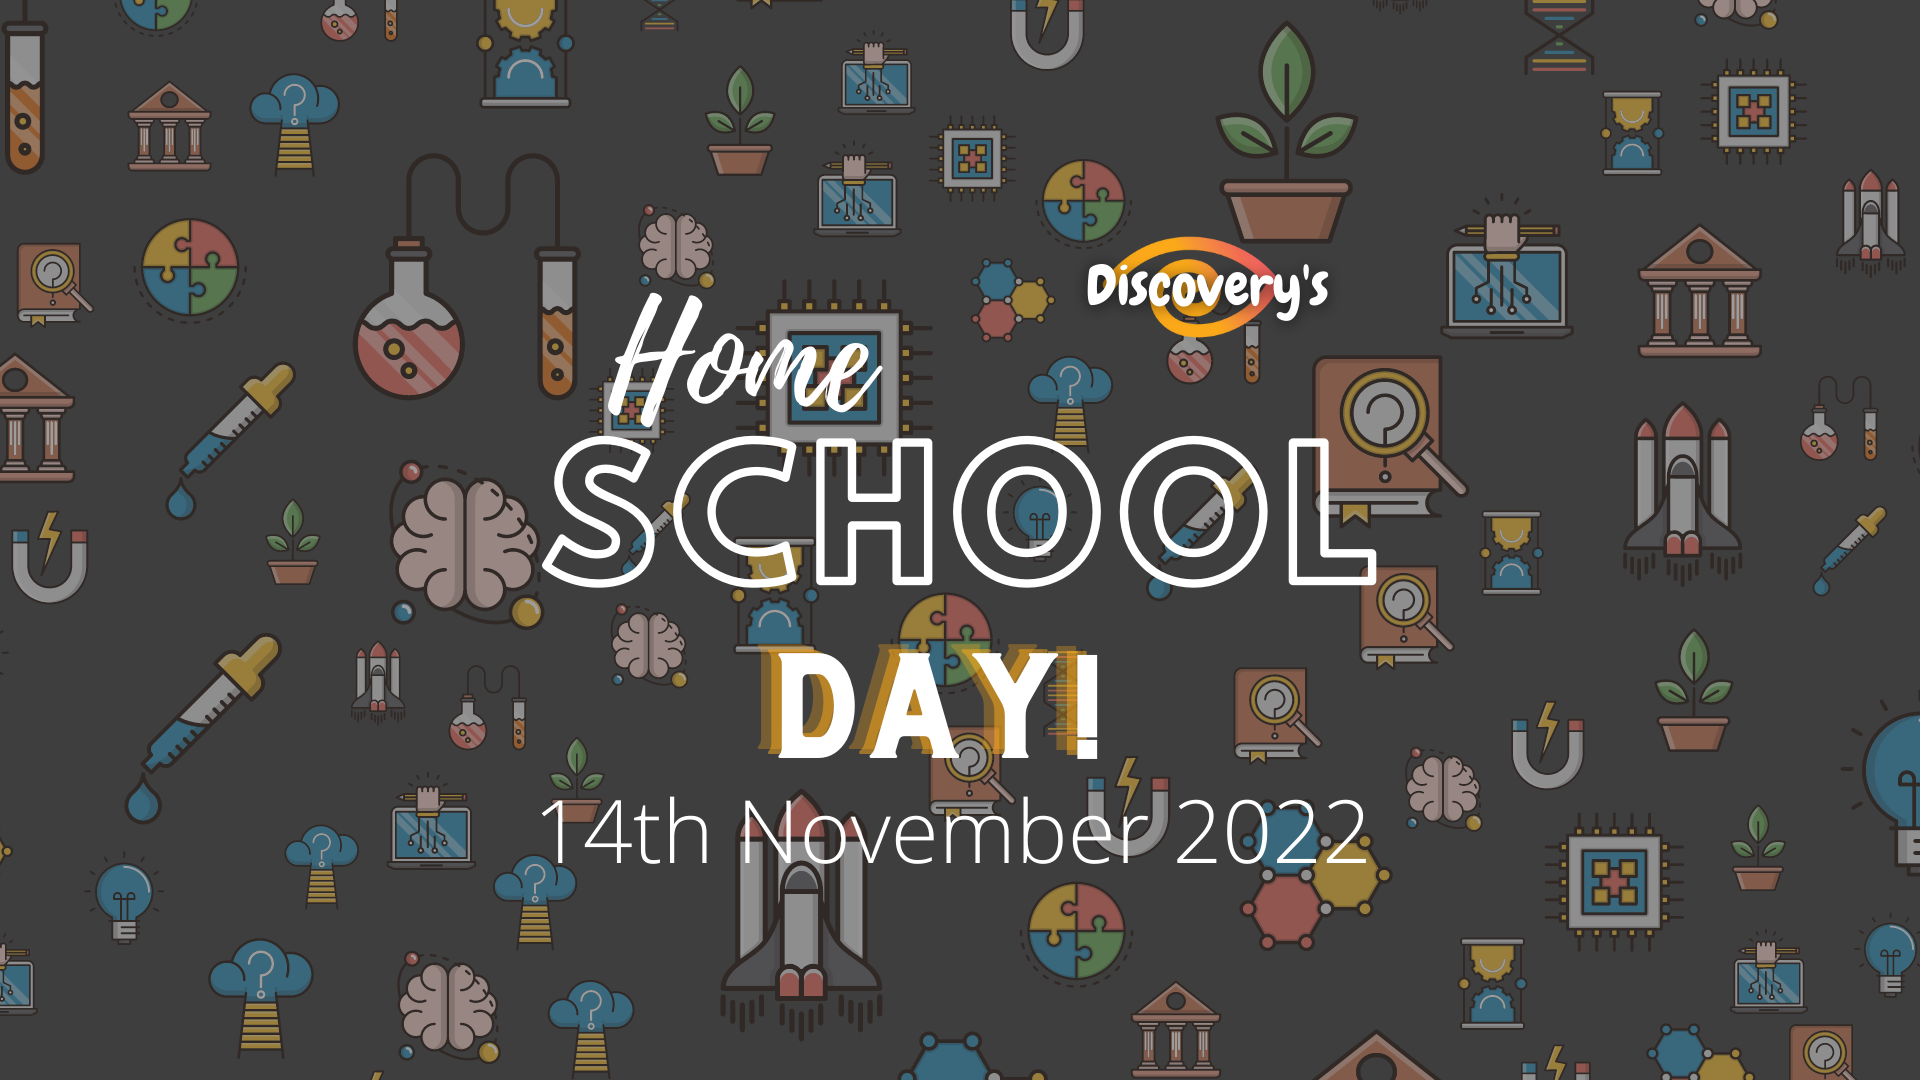 Home School Day 14th November 2022!